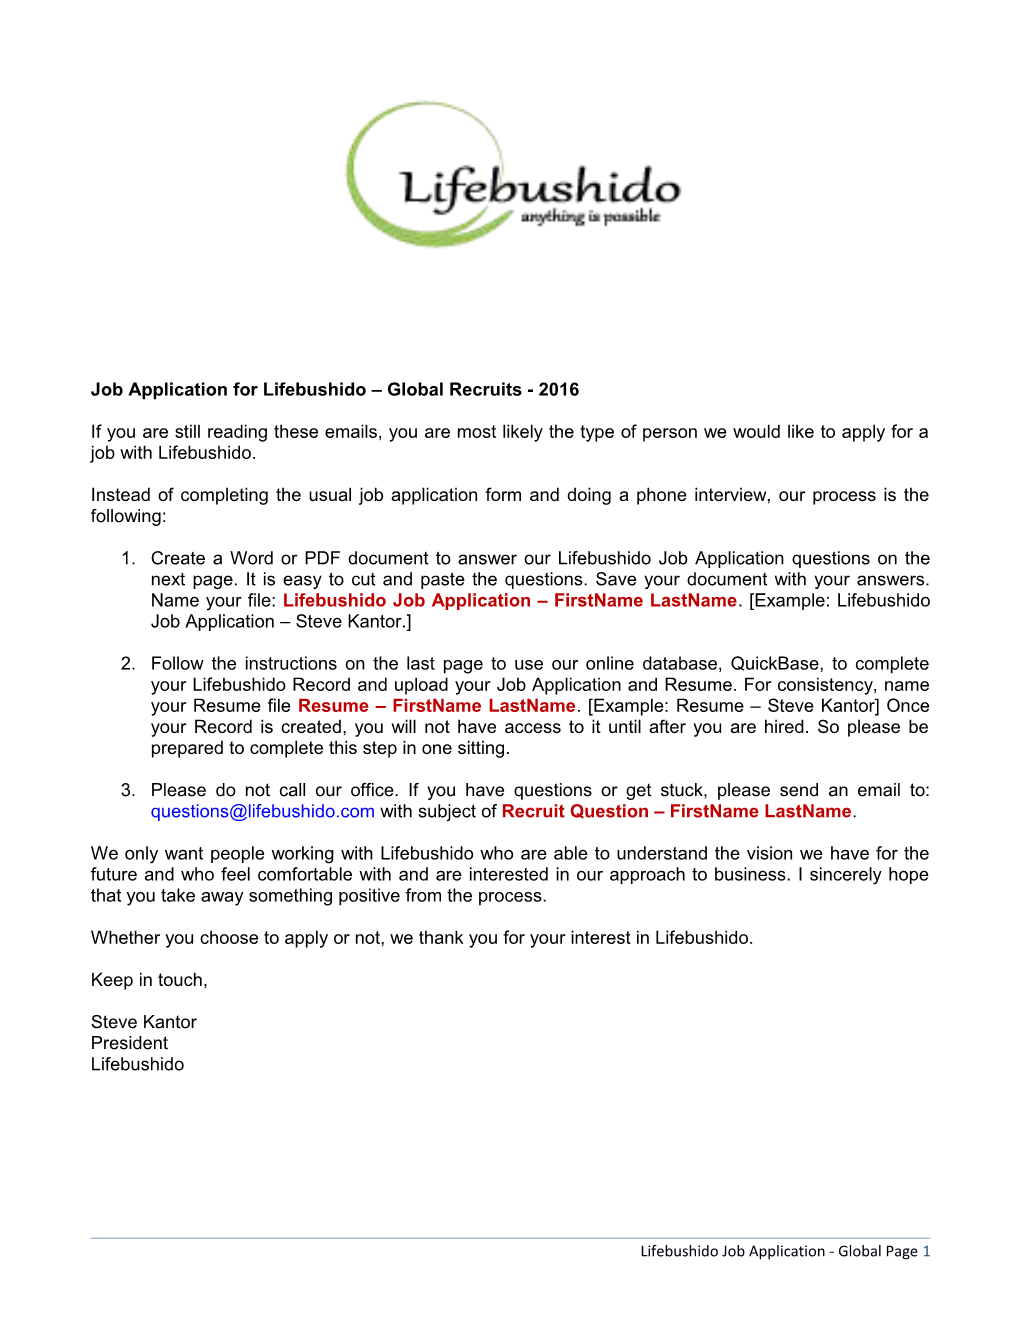 Job Application for Lifebushido Global Recruits - 2016